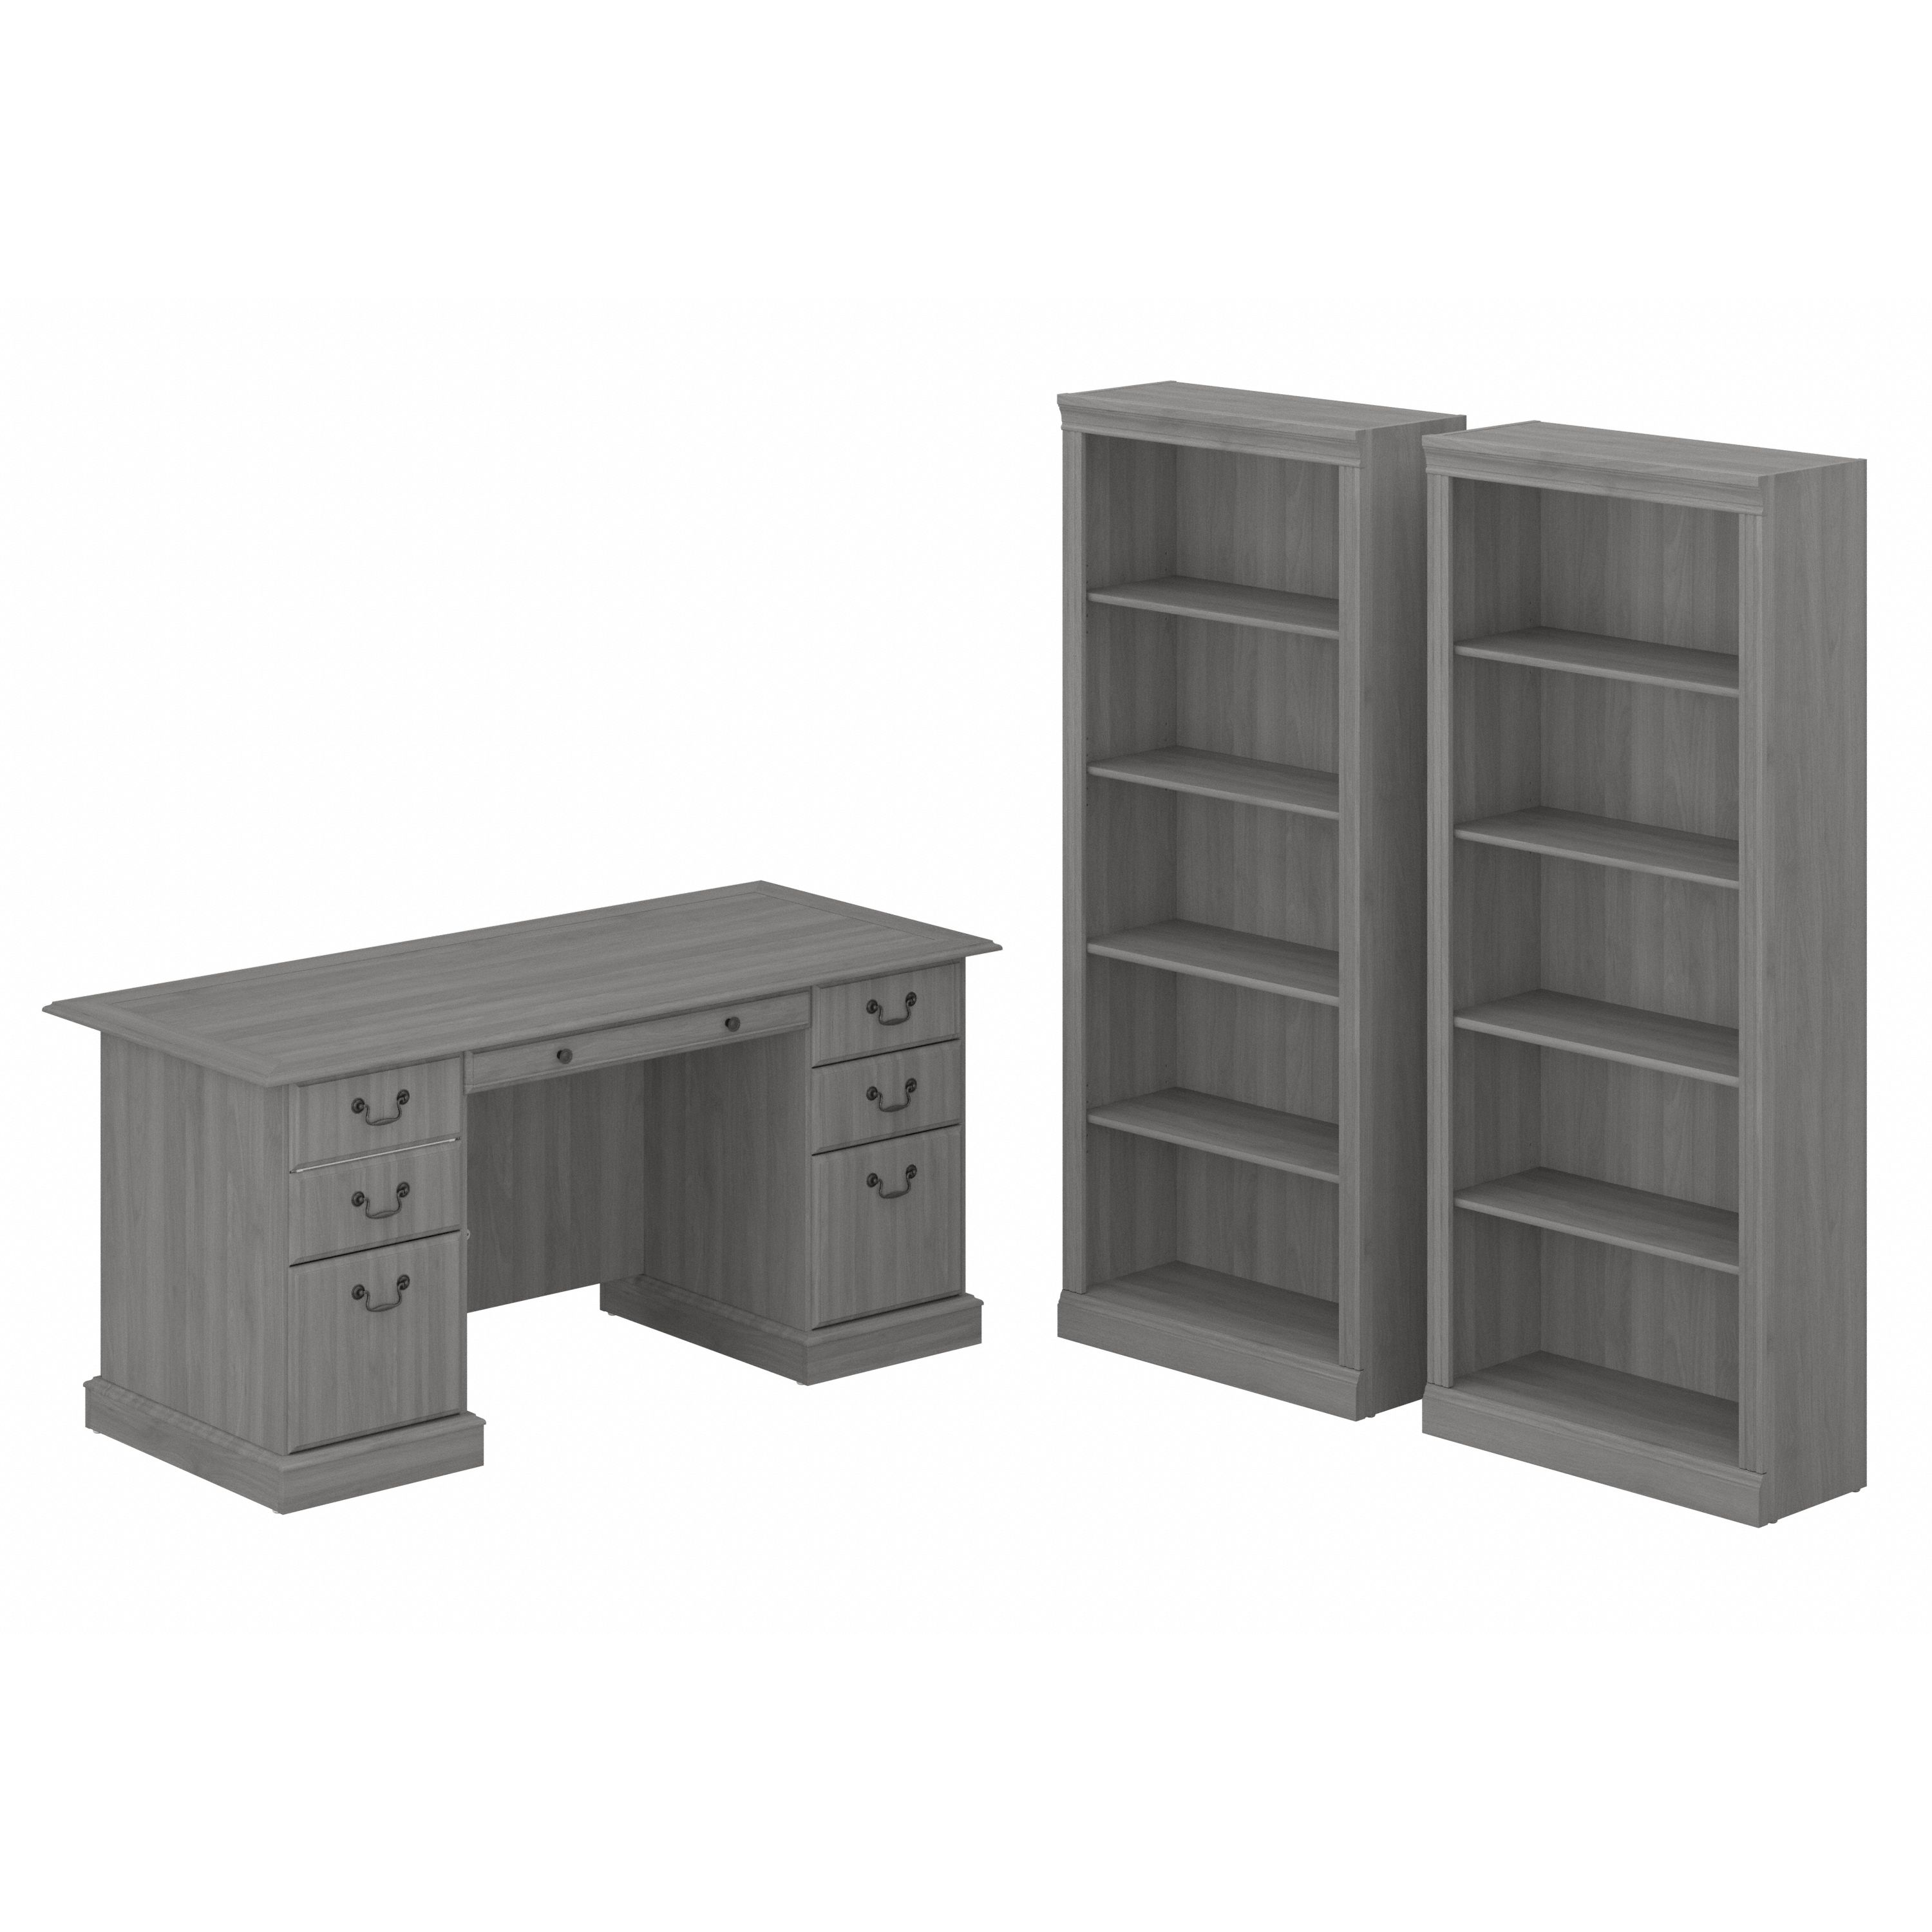 Shop Bush Furniture Saratoga Executive Desk and Bookcase Set 02 SAR003MG #color_modern gray